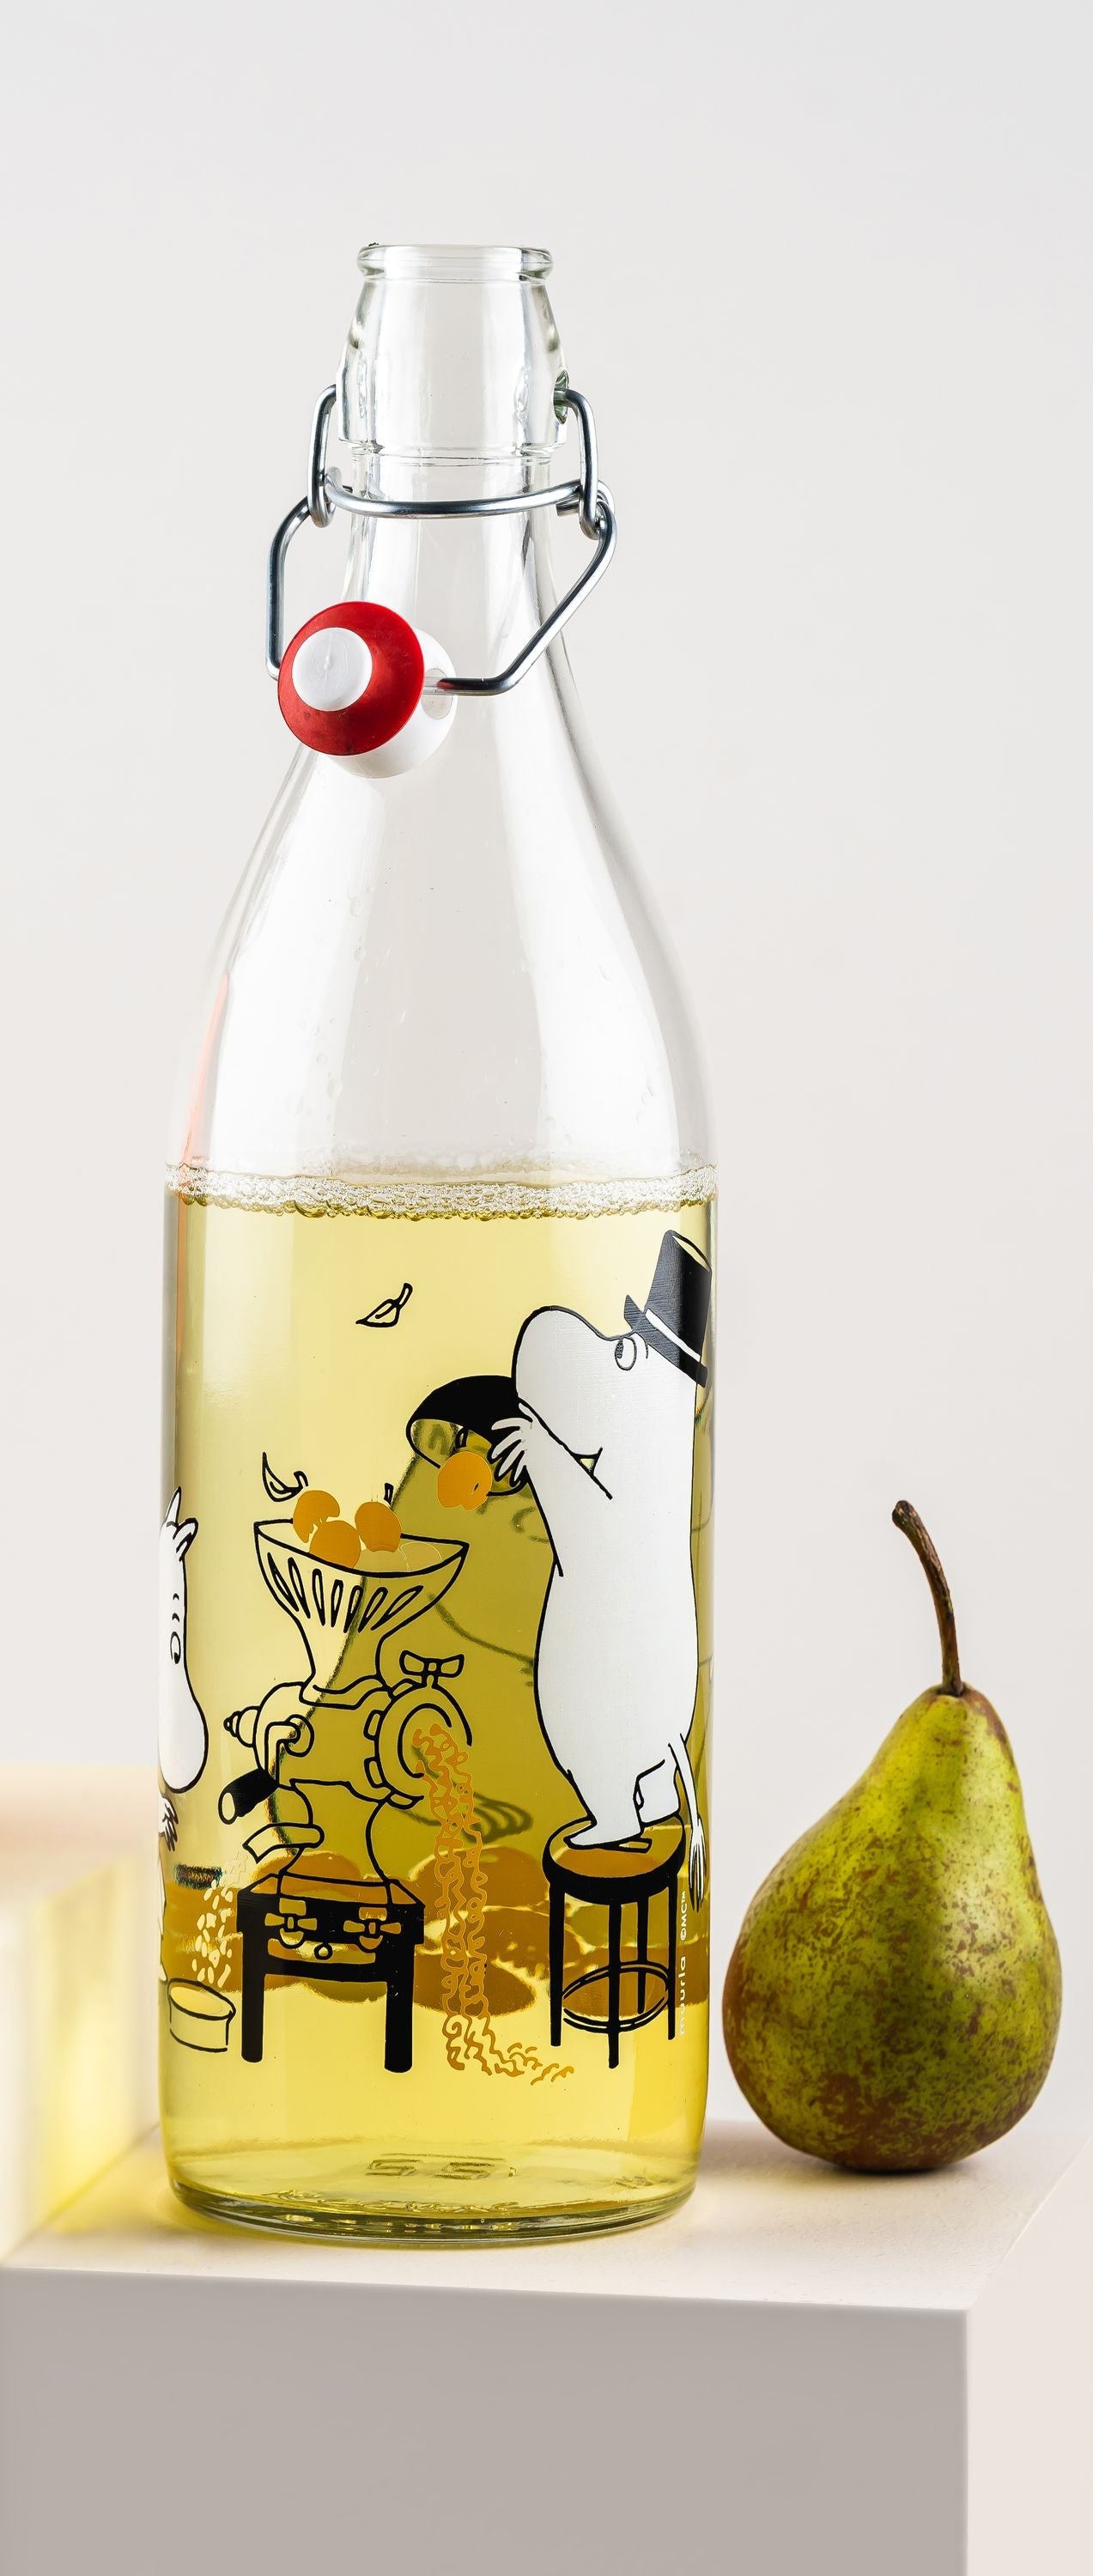 Skleněná láhev Muurla Moomin, ovoce